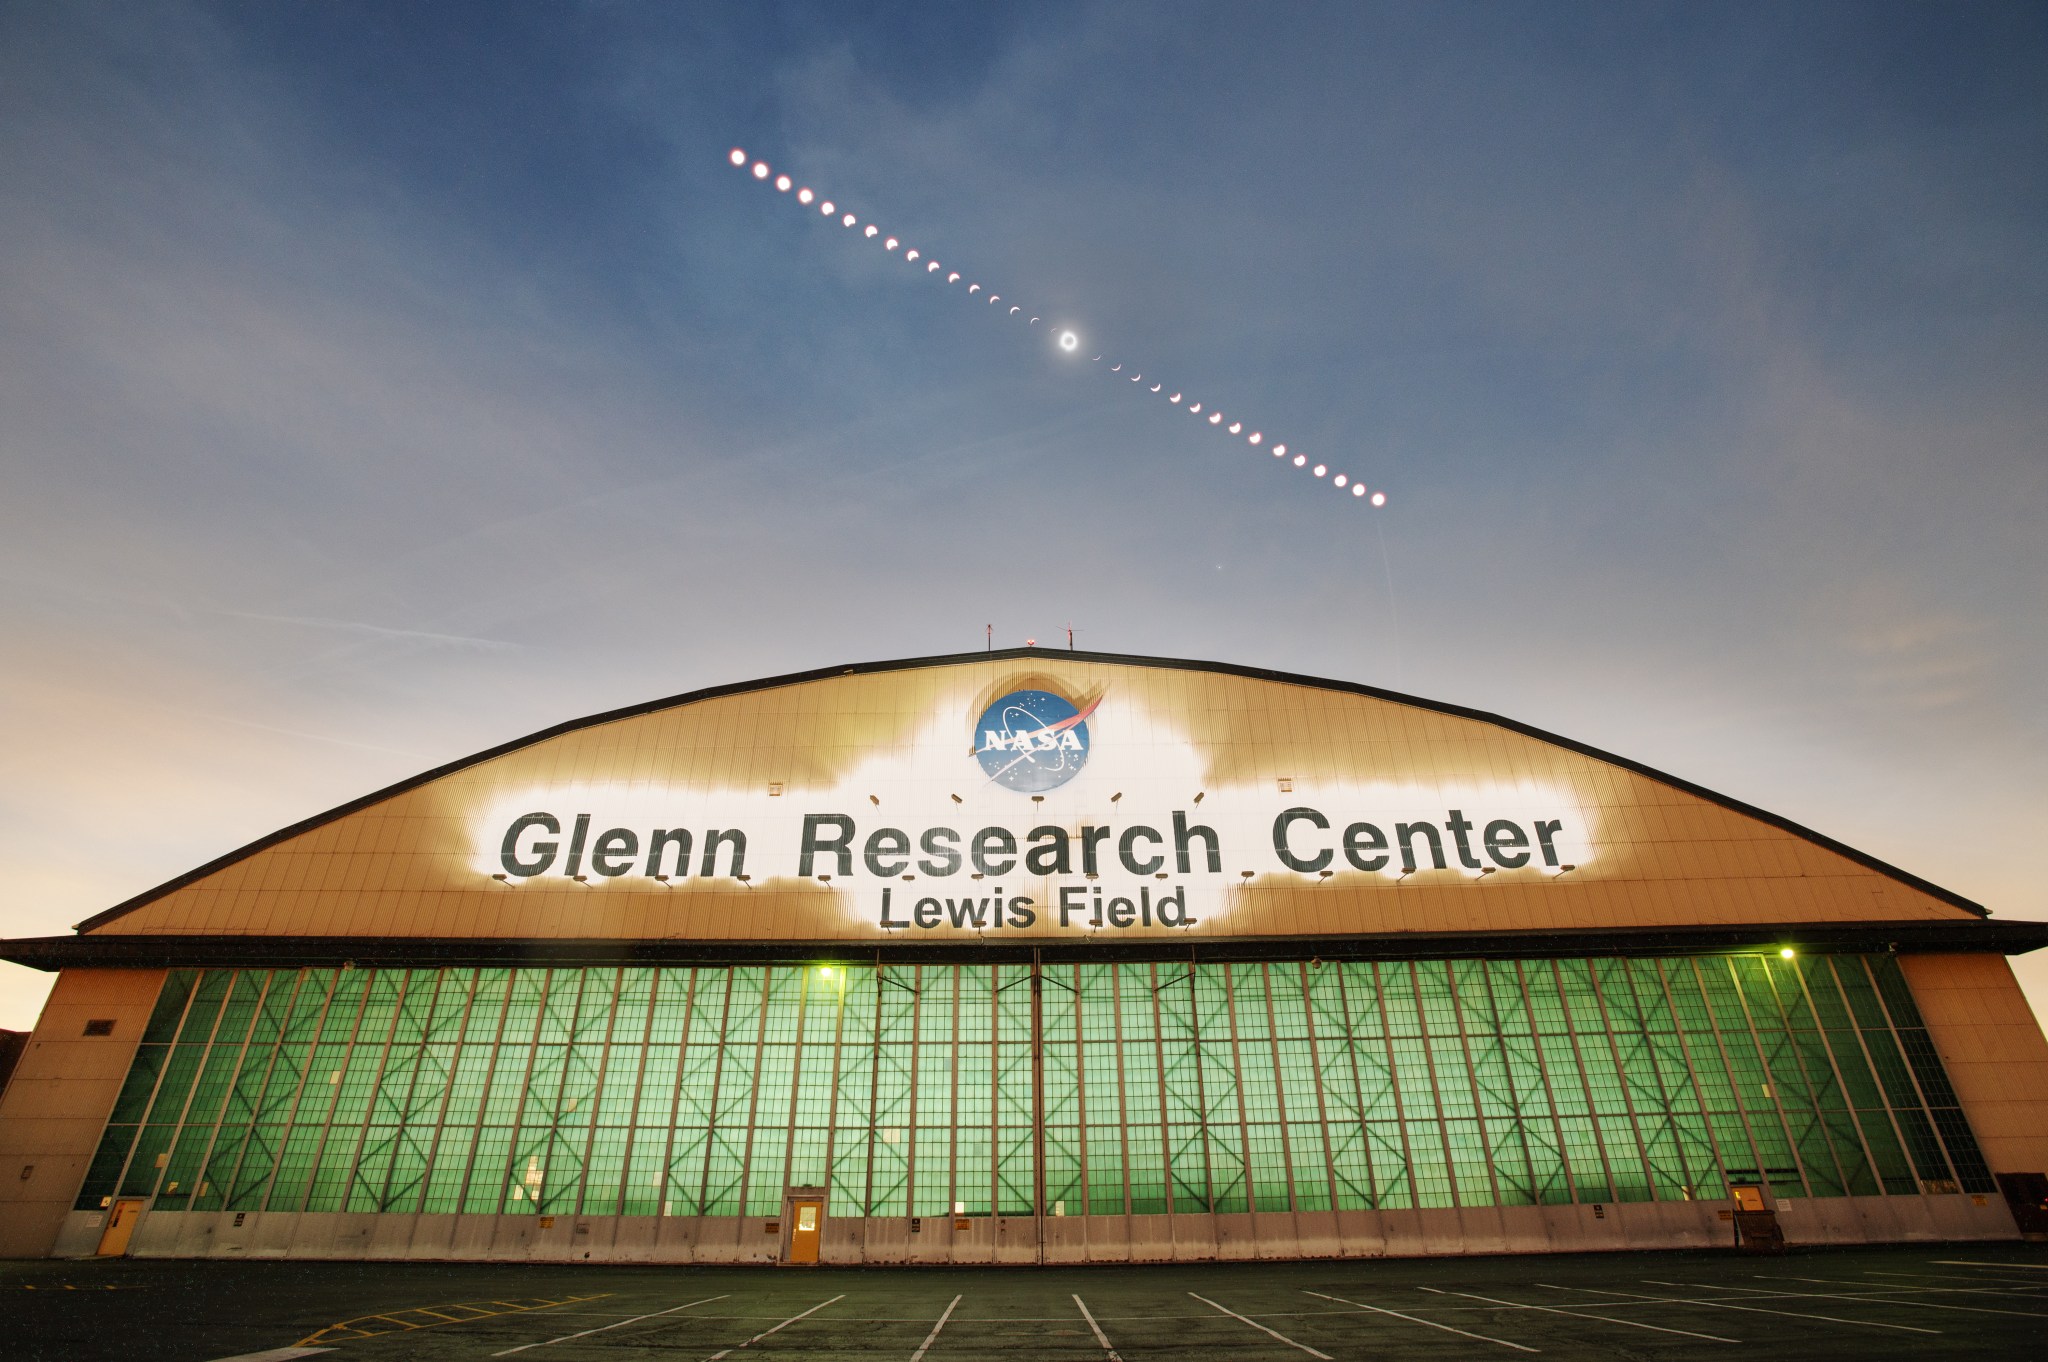 Going Through Changes: Total Eclipse Over NASA Hangar